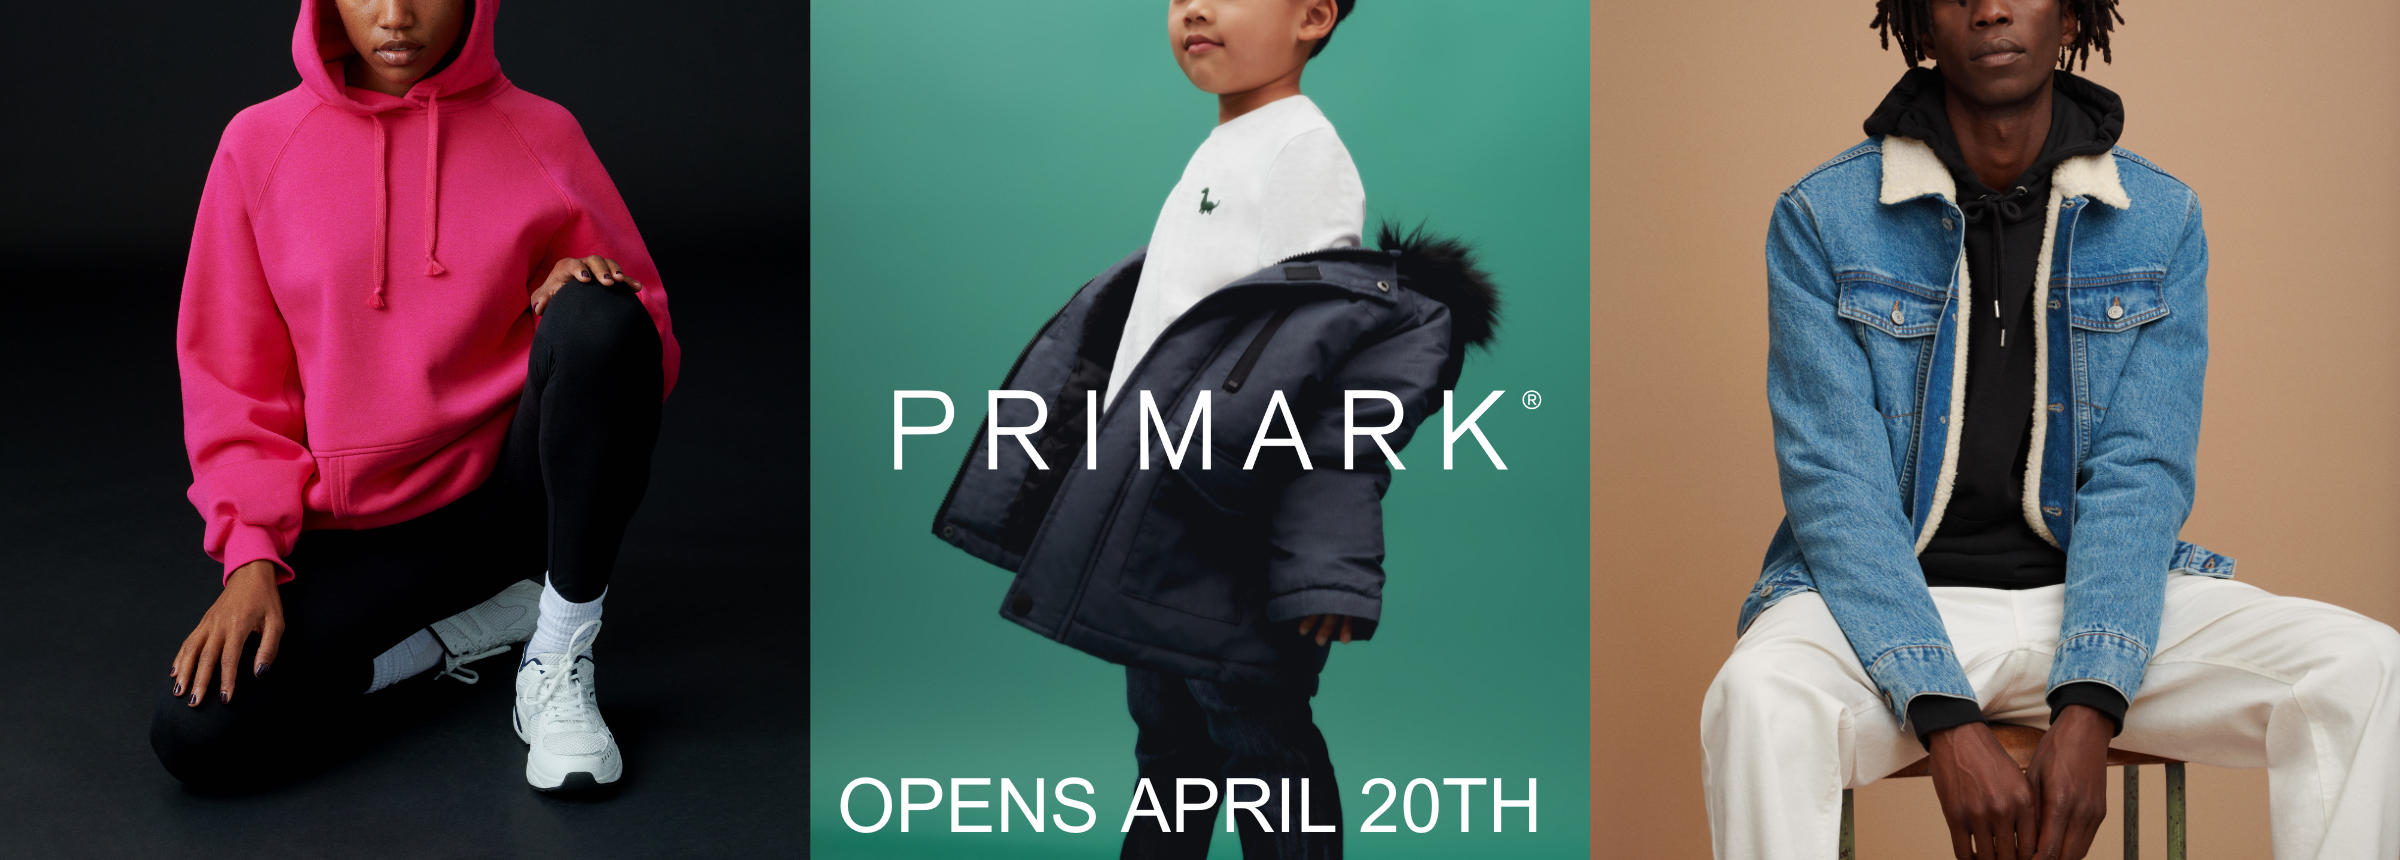 Primark Hero Image Ad 2 Opens April 20th